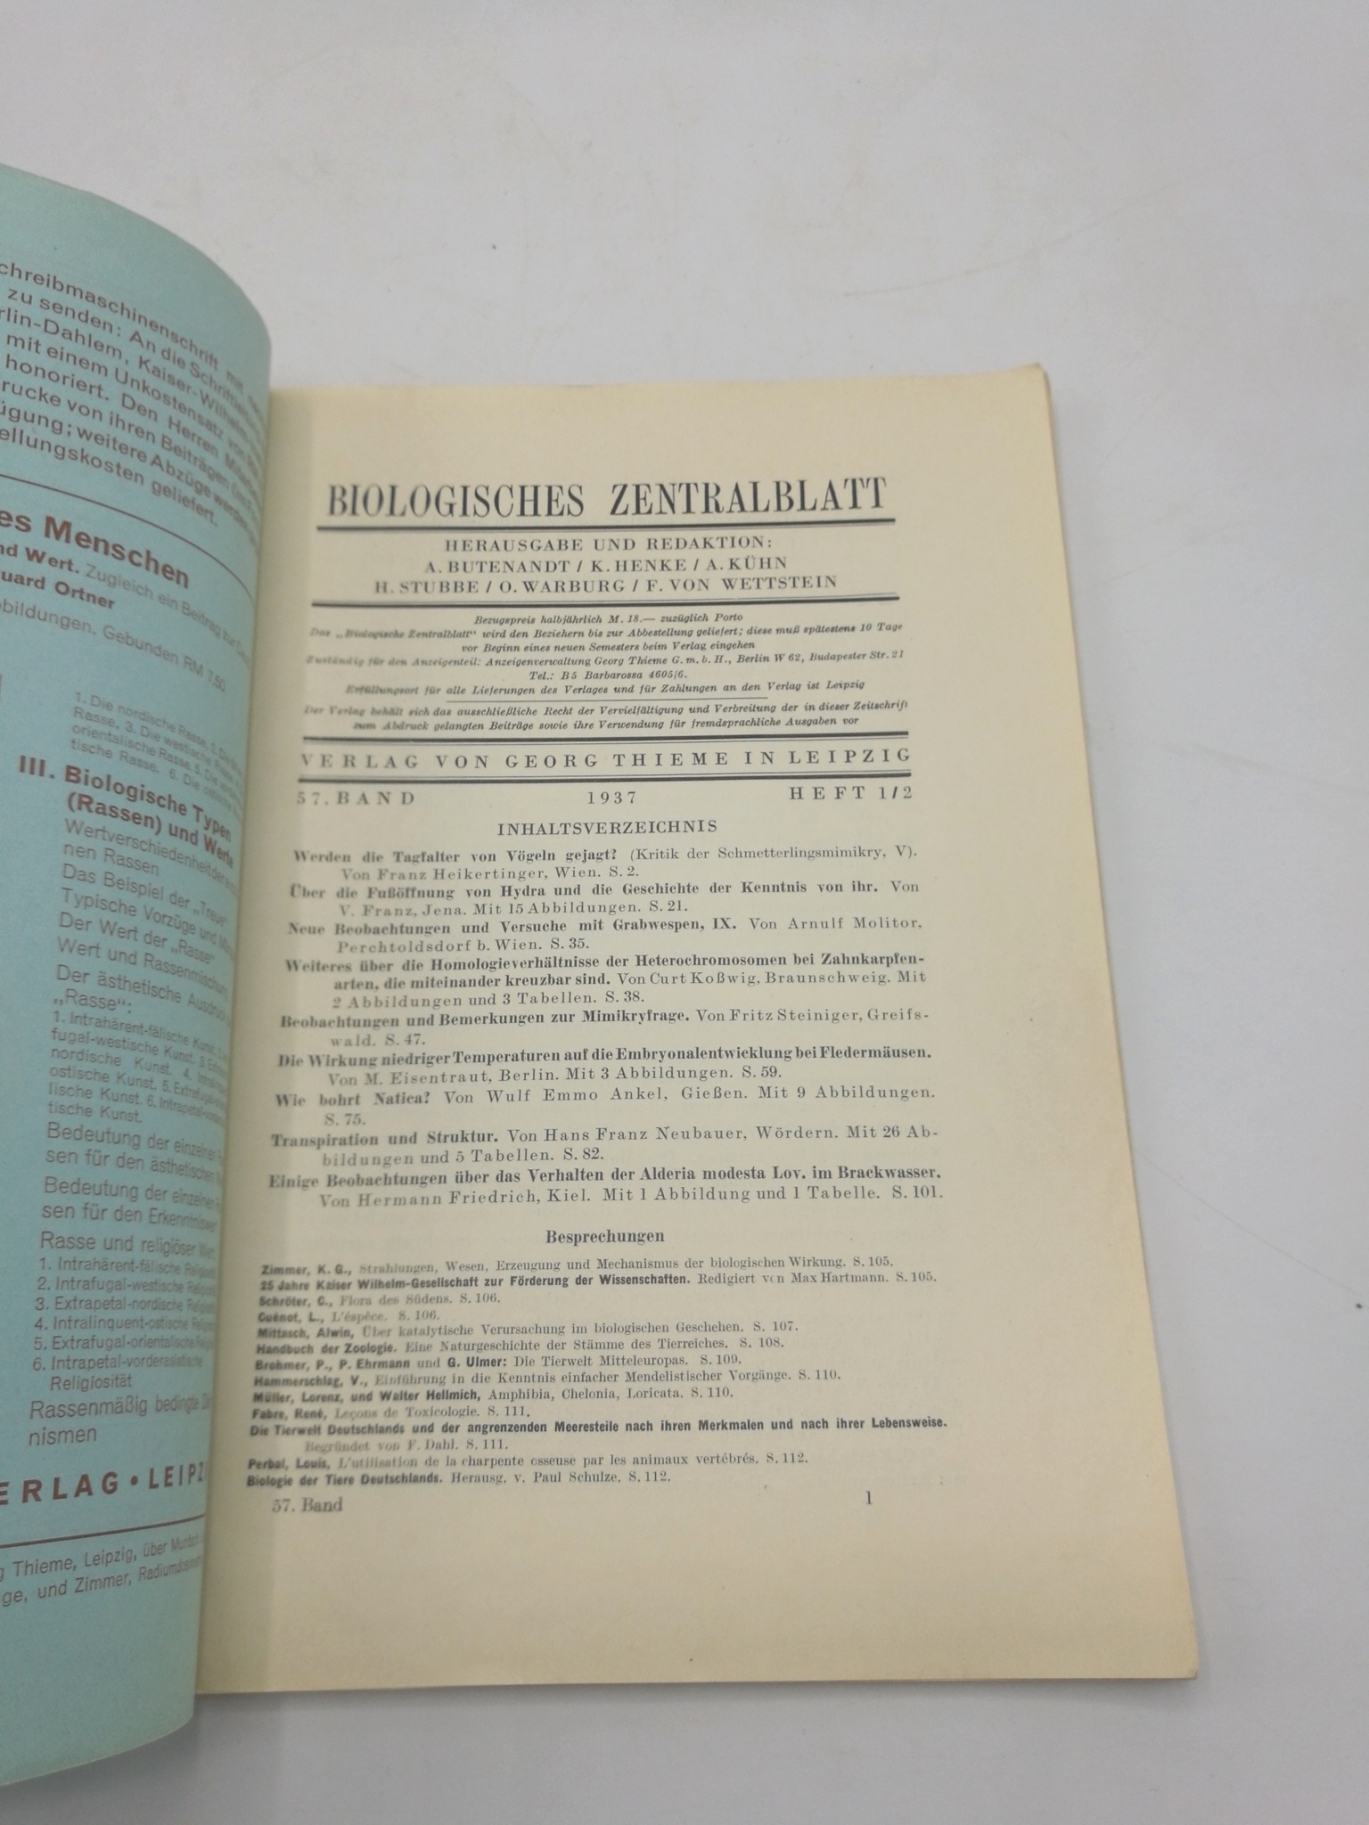 Butenandt et al (Hrsg.), A.: Biologisches Zentralblatt. 57. Band, Heft 1/2, 1937 Begründet von J. Rosenthal